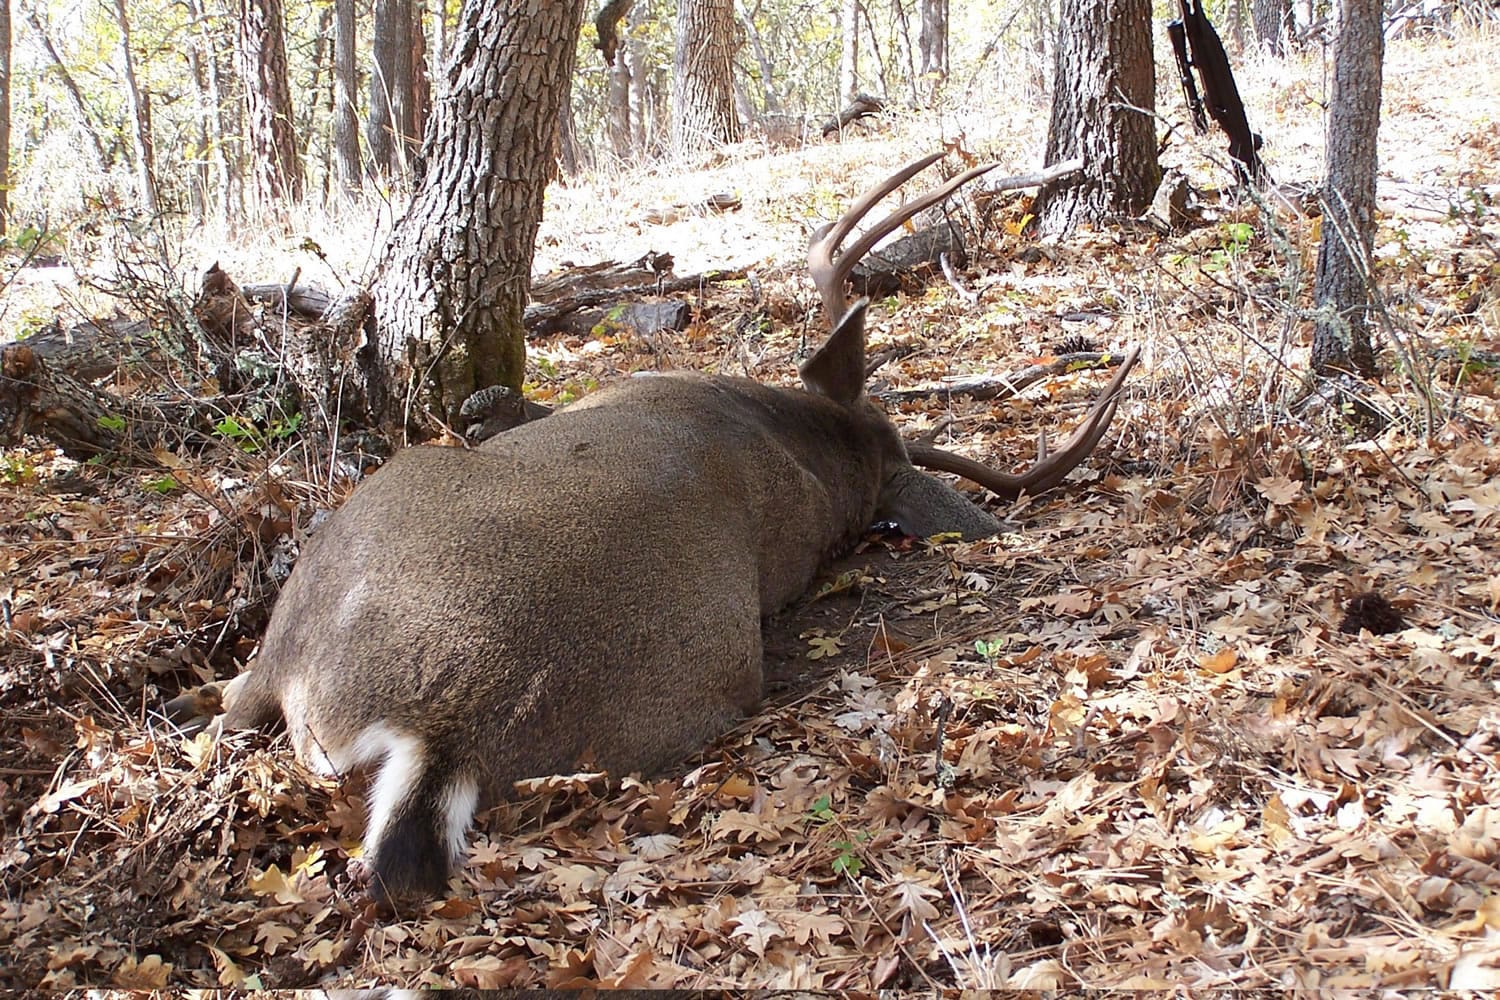 In 2011, Washington sold 2,200 multiple-season permits for deer.